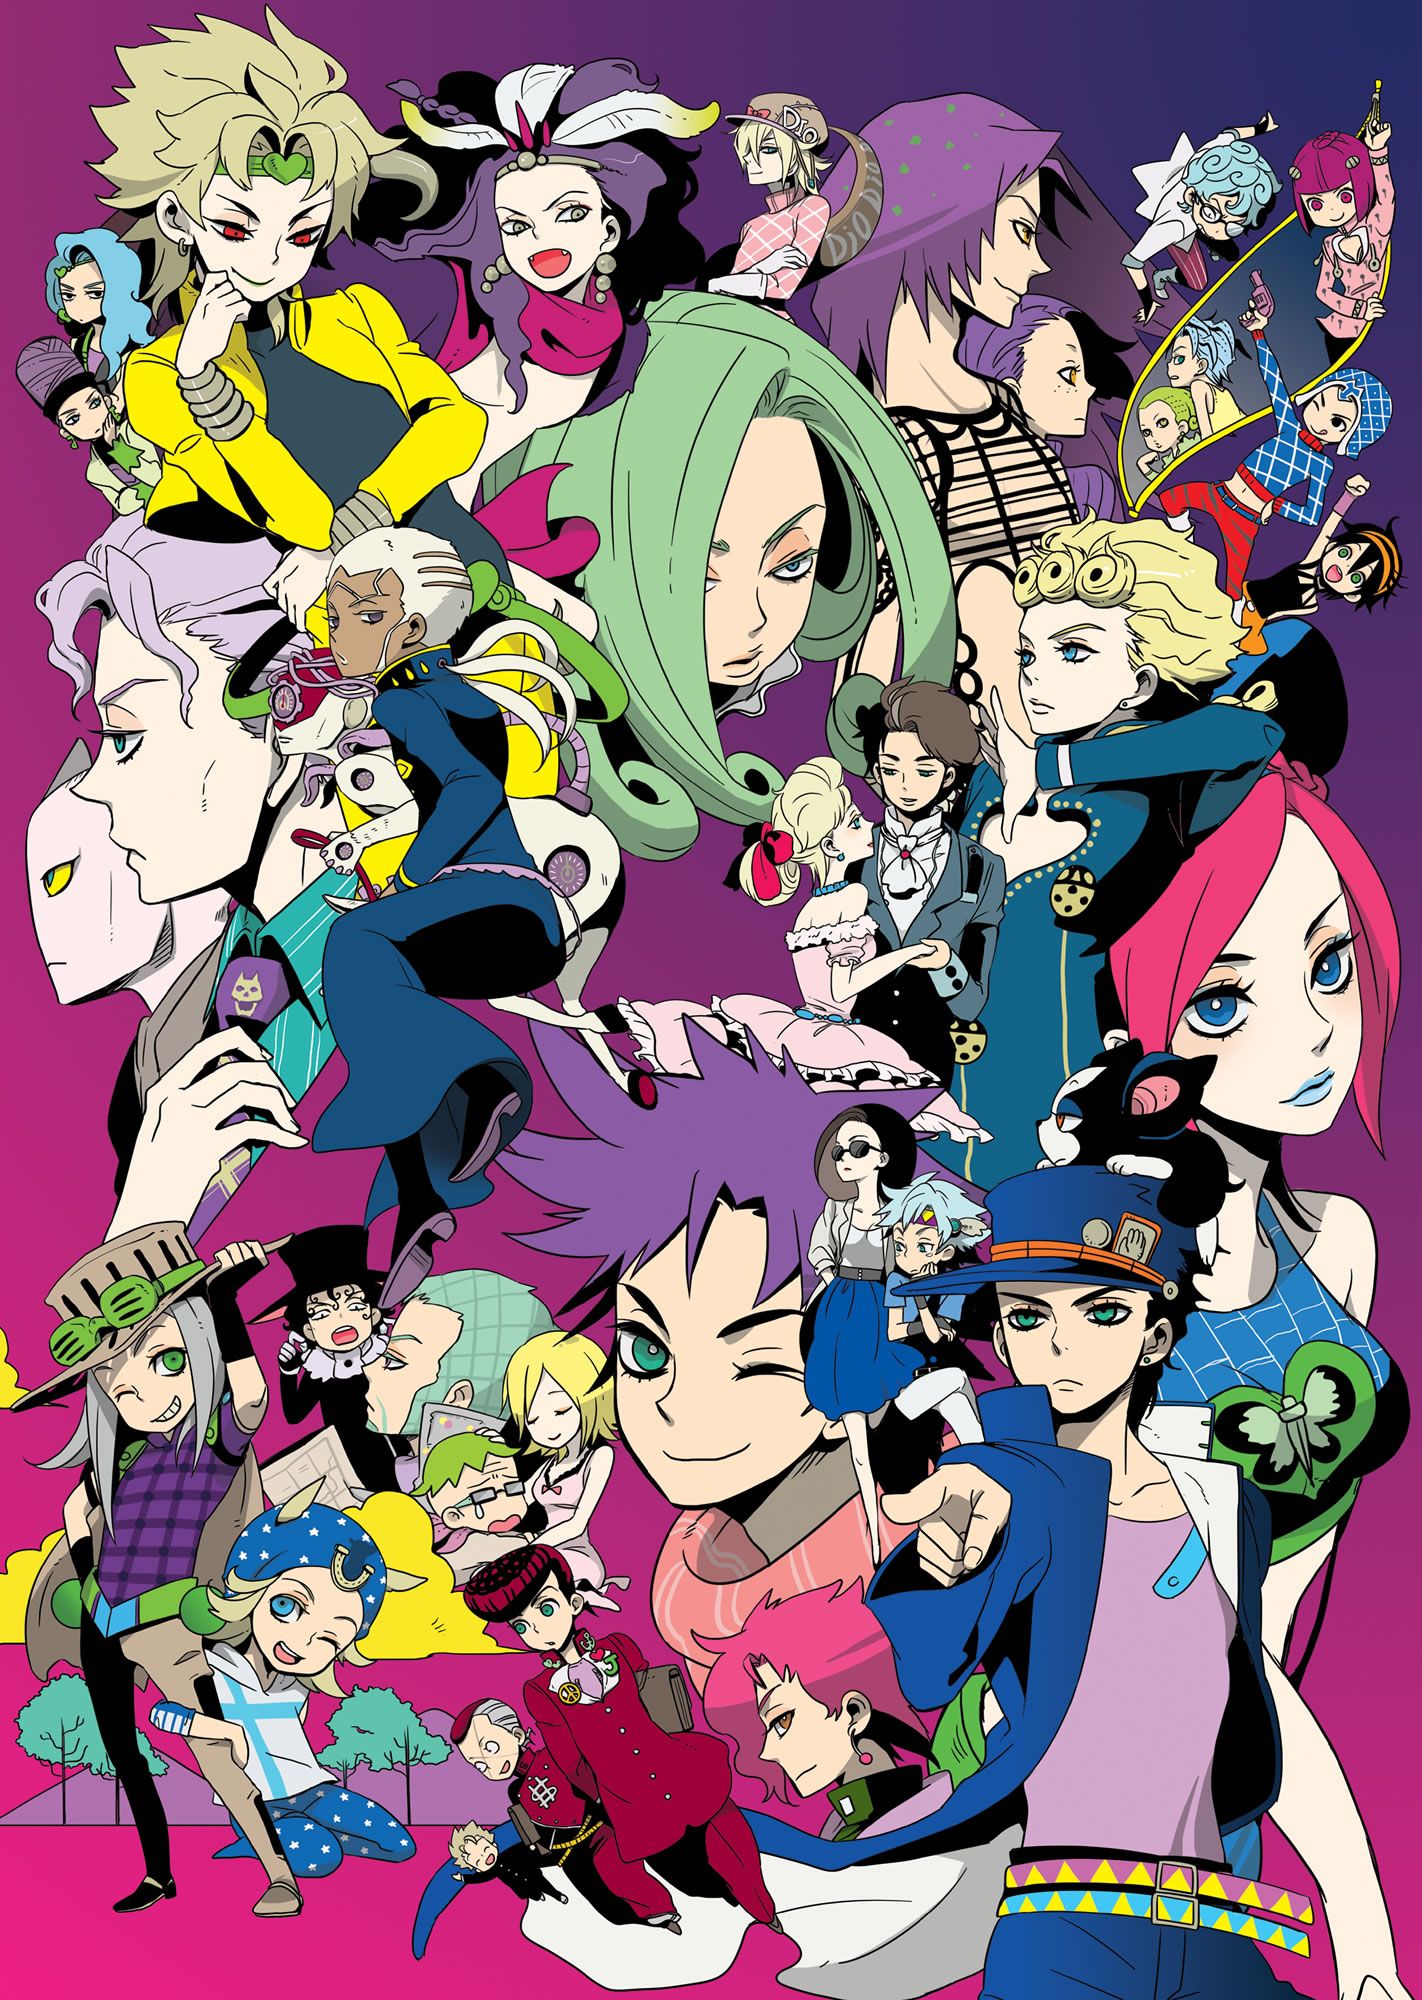 JoJo no Kimyou na Bouken (Jojo's Bizarre Adventure) Hirohiko Wallpaper Anime Image Board